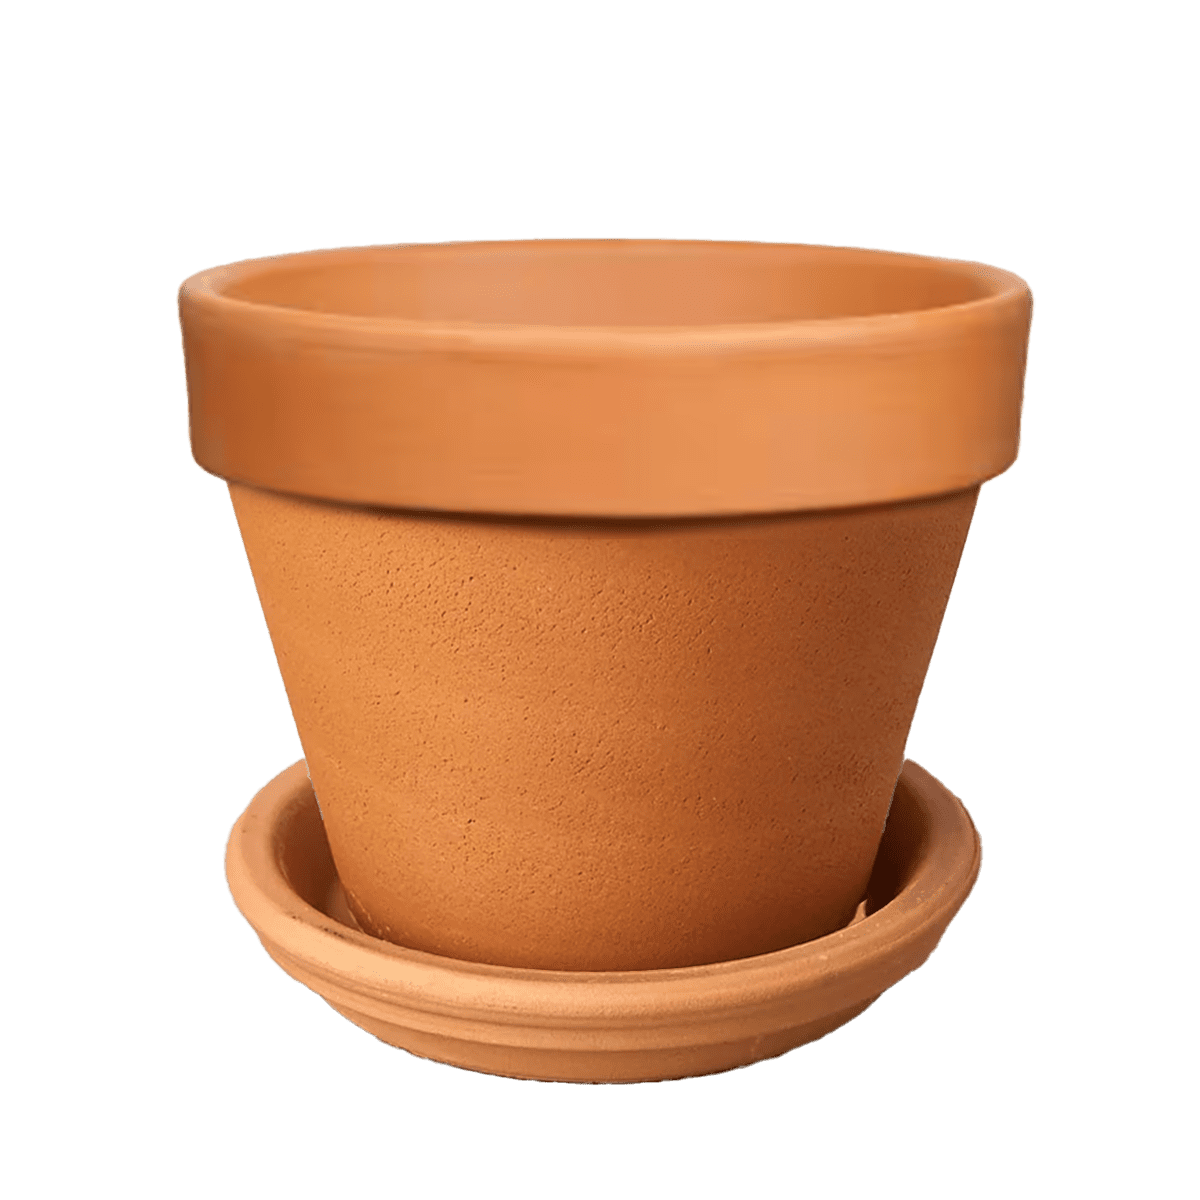 House Plants for Sale in Terracotta Pots | Houseplant Sale